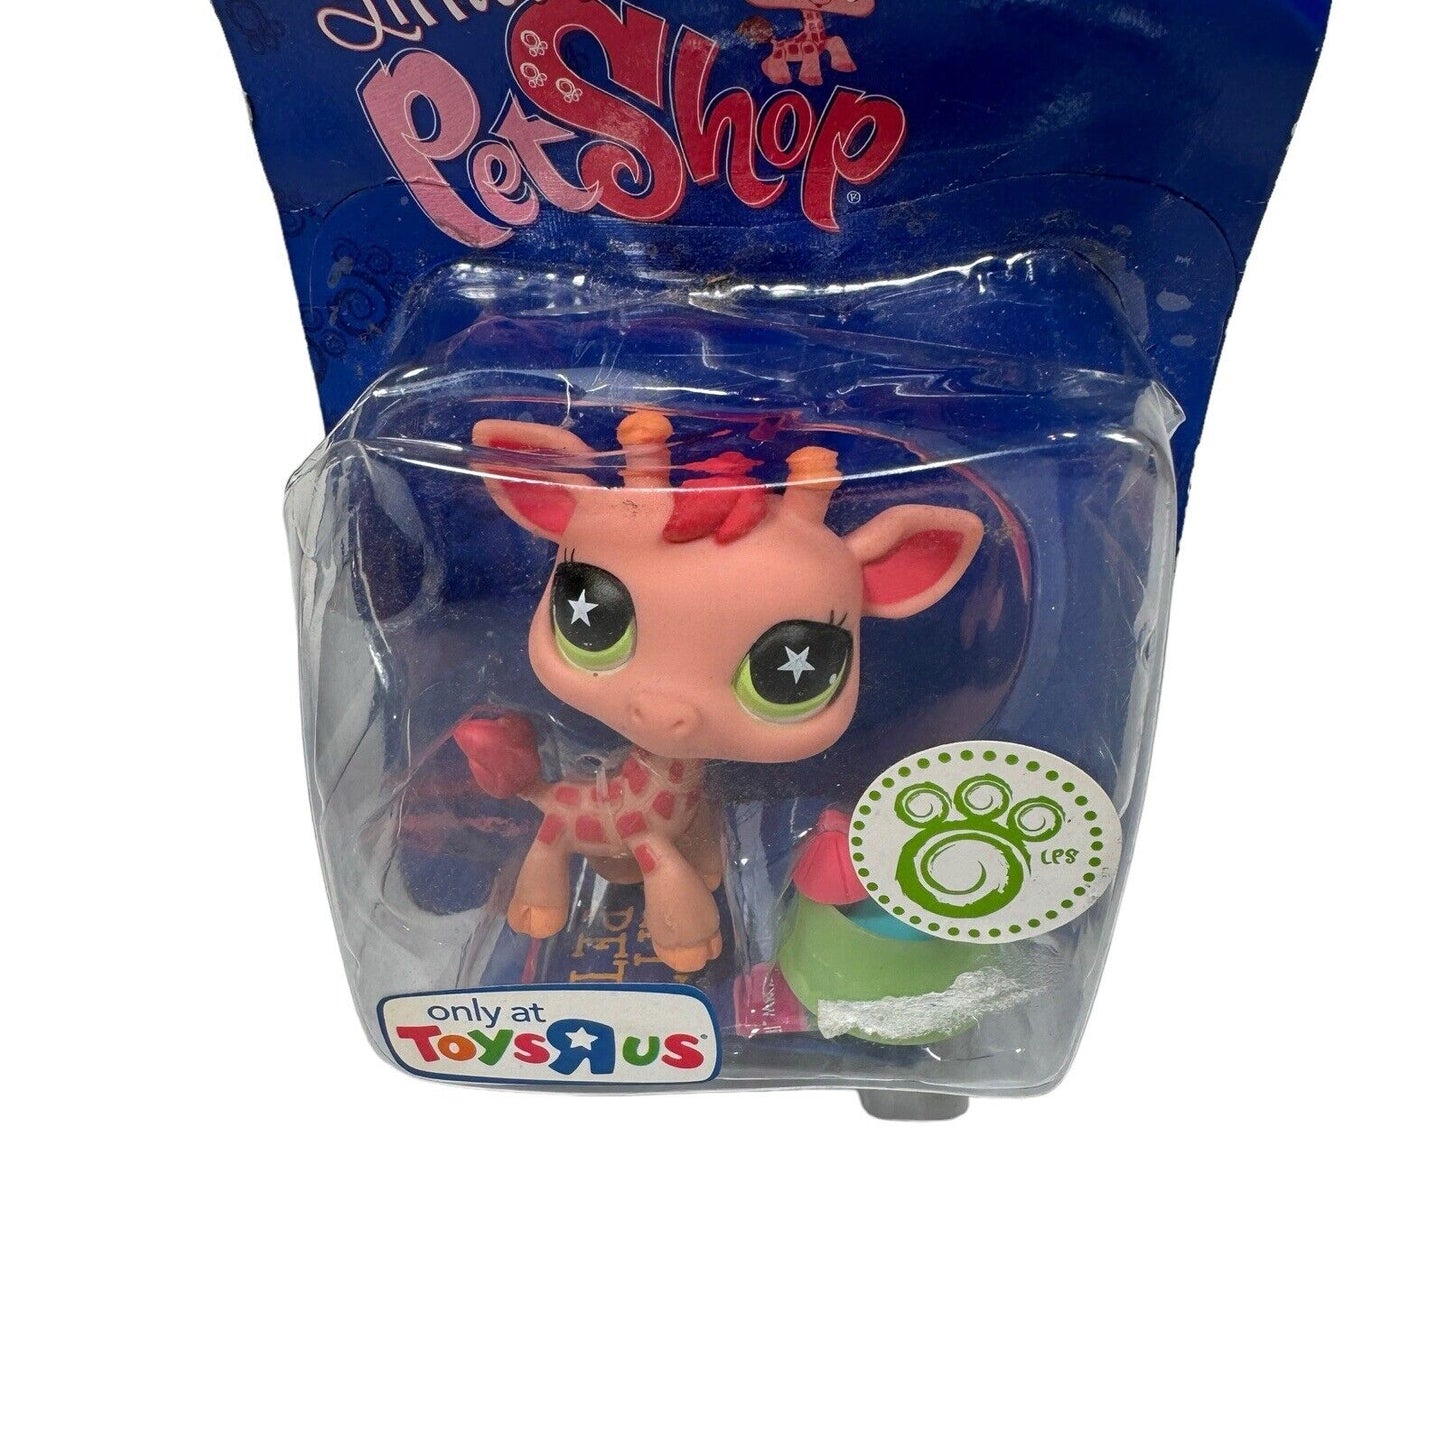 Littlest Pet Shop ROSEY PINK Giraffe 943 New In Package